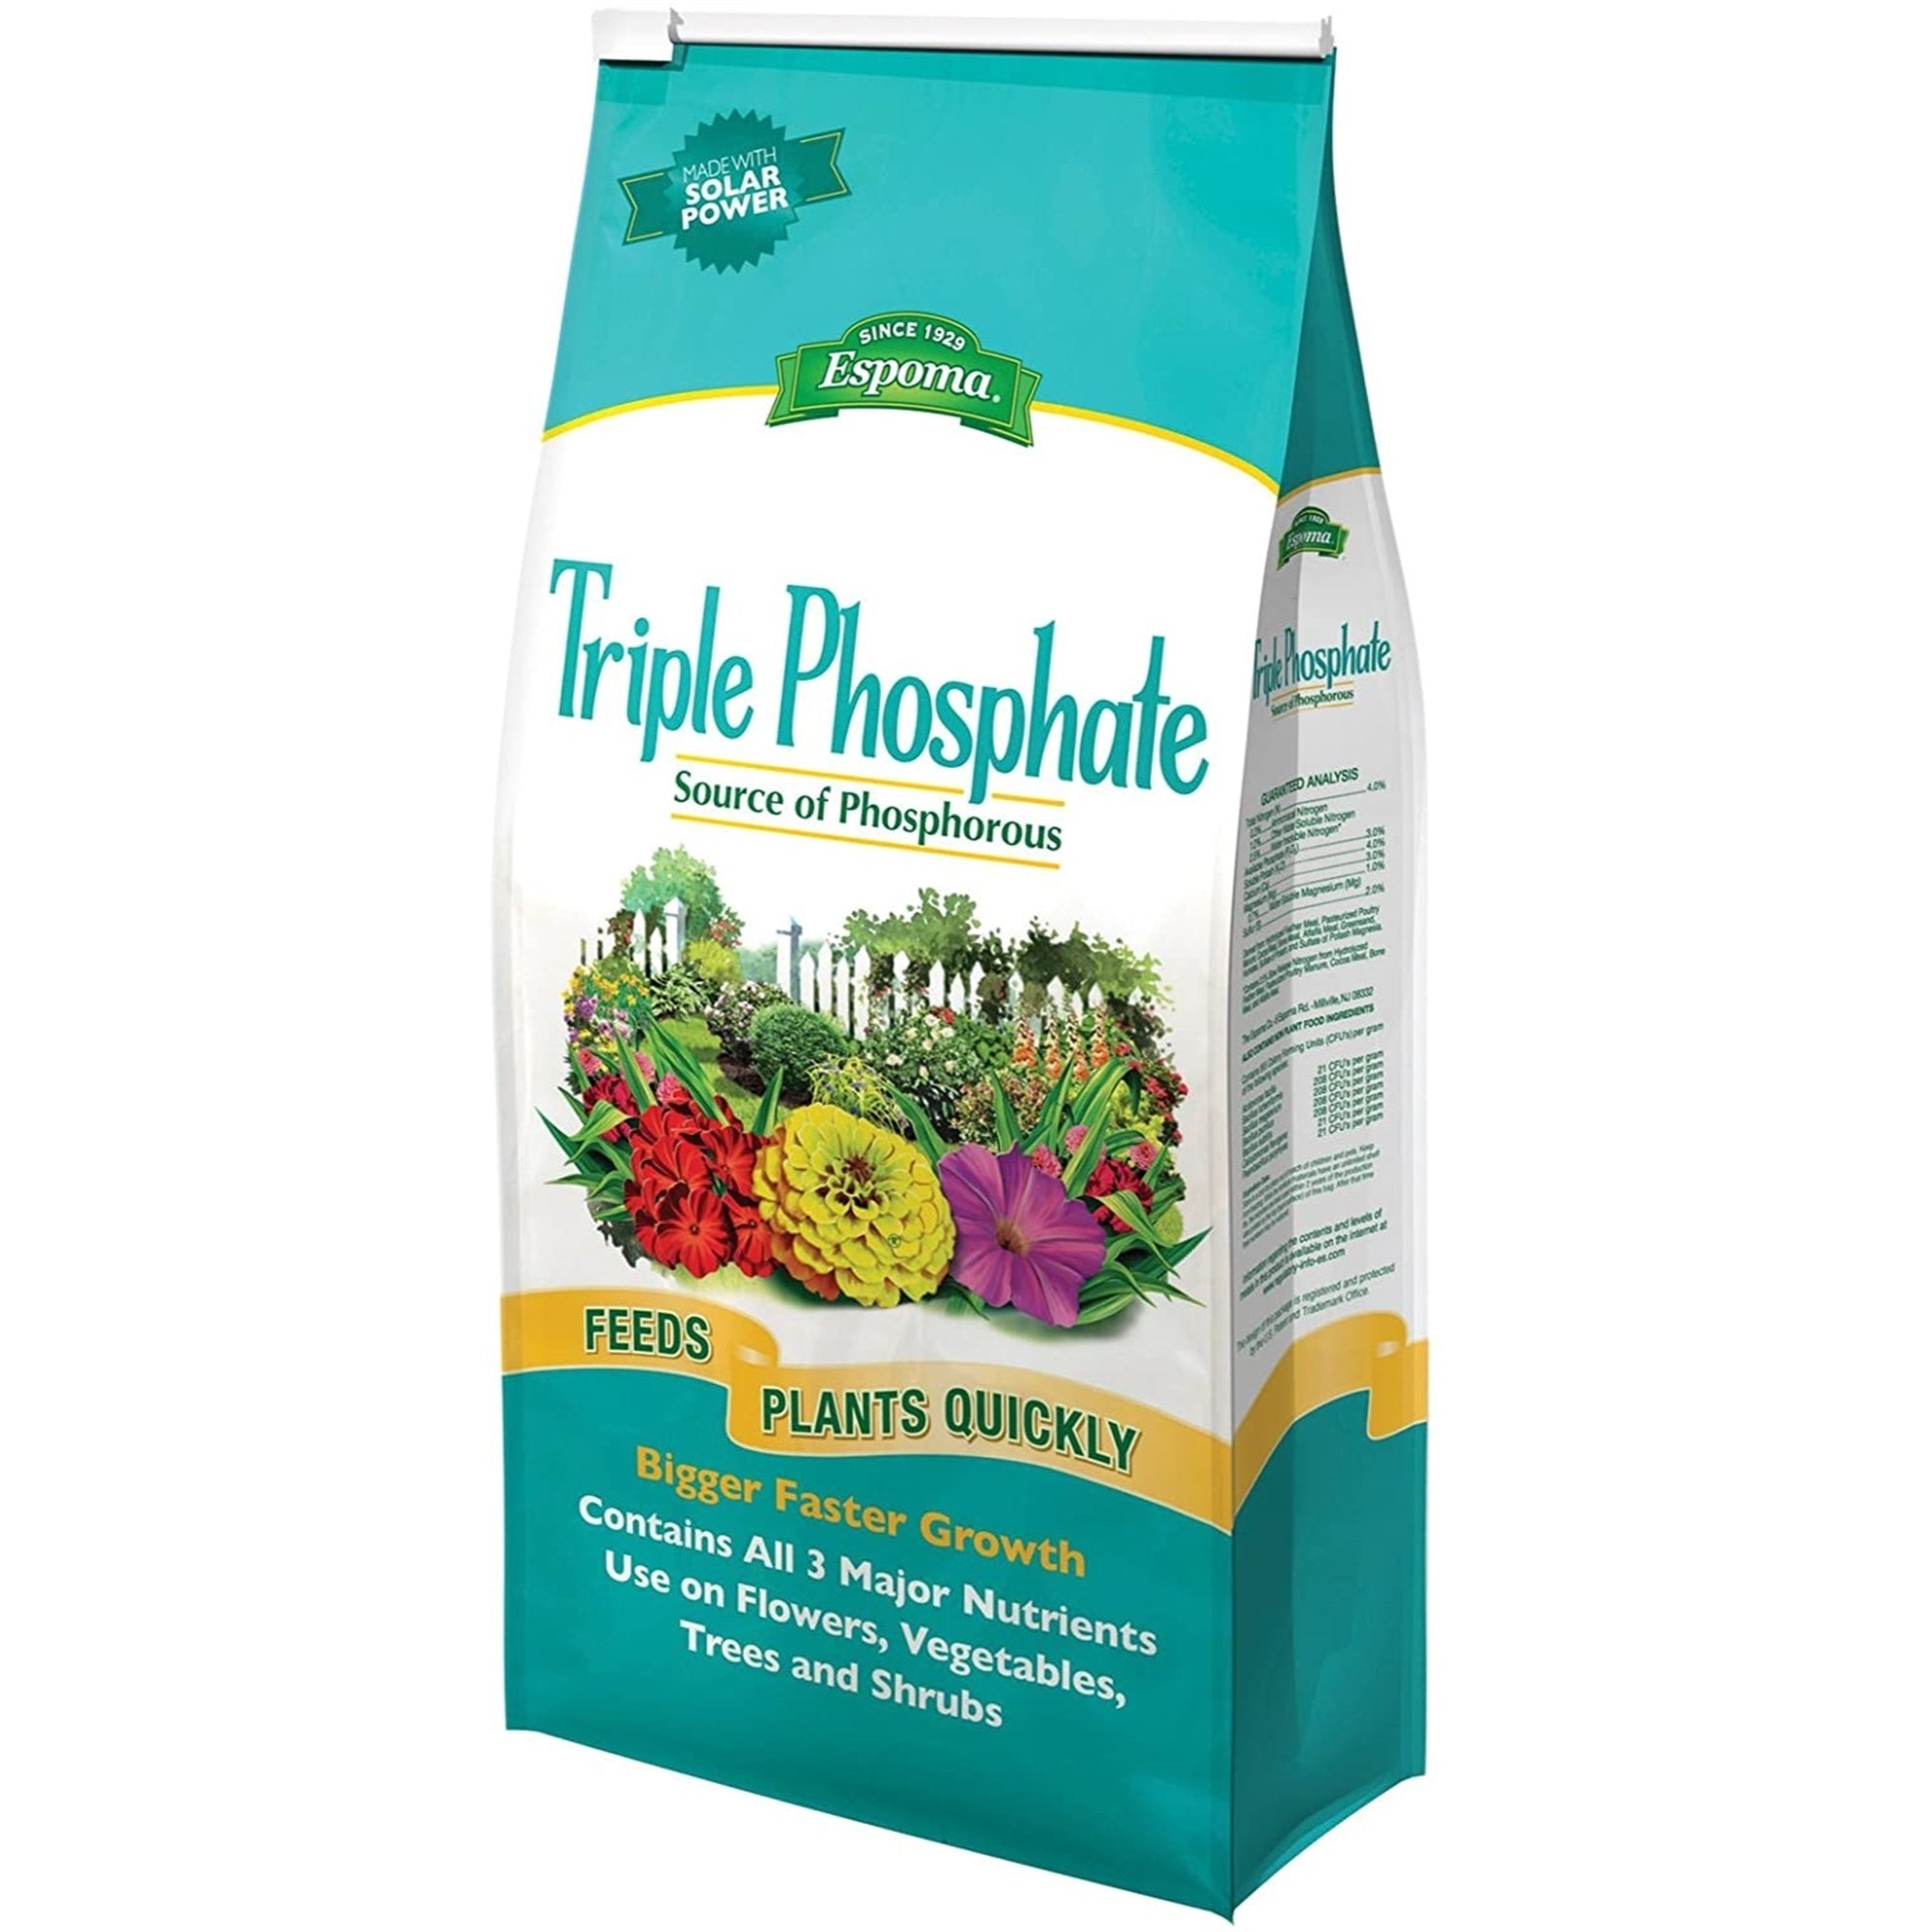 Espoma Triple Phosphate 0-45-0 Source of Phosphorous, Feeds Plants Quickly, 6.5 Lb Bag